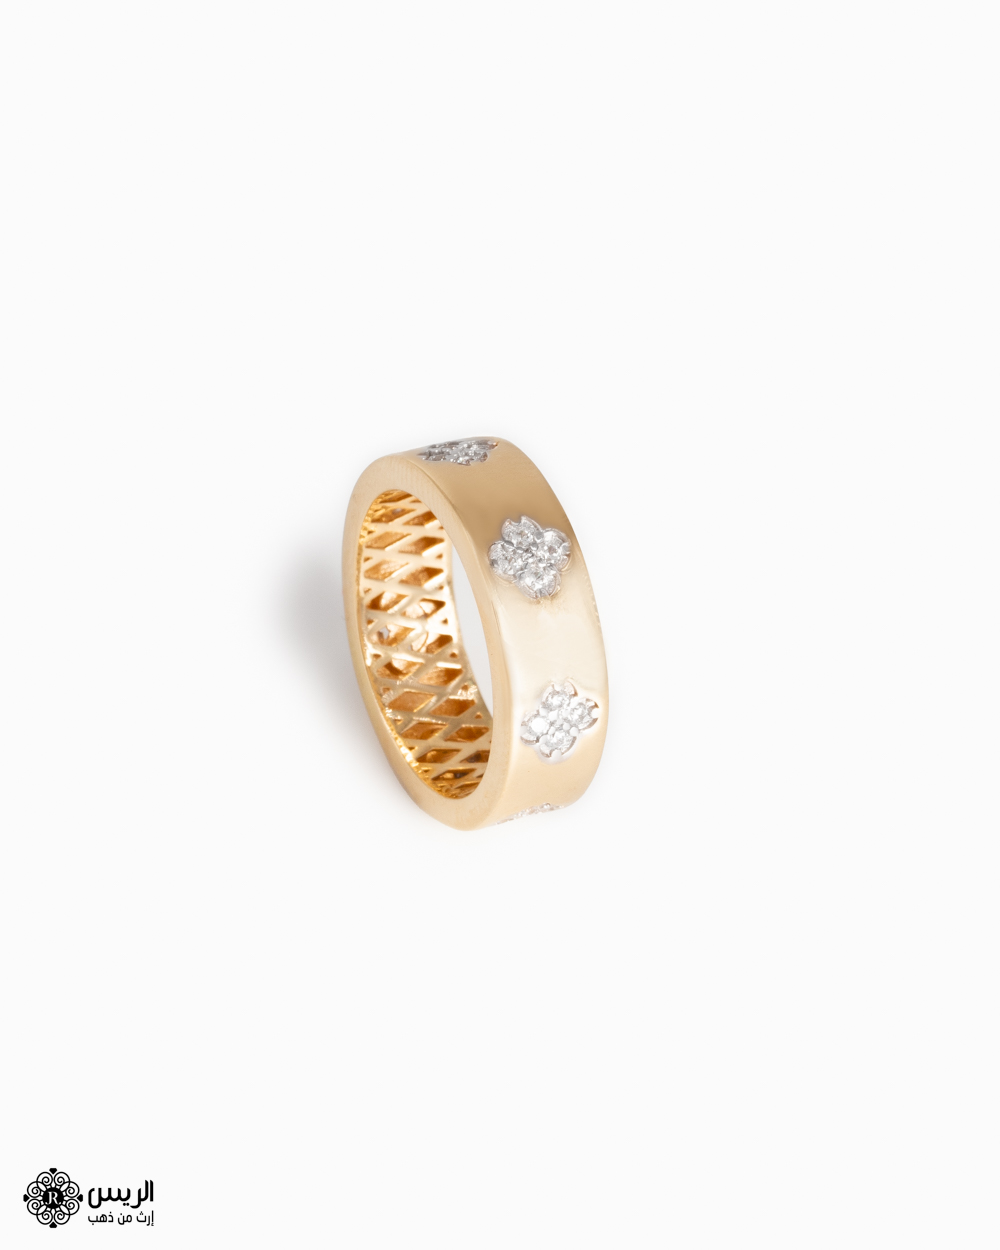 Raies jewelry Wedding Ring Fashionable Design دبلة تصميم عصري الريس للمجوهرات